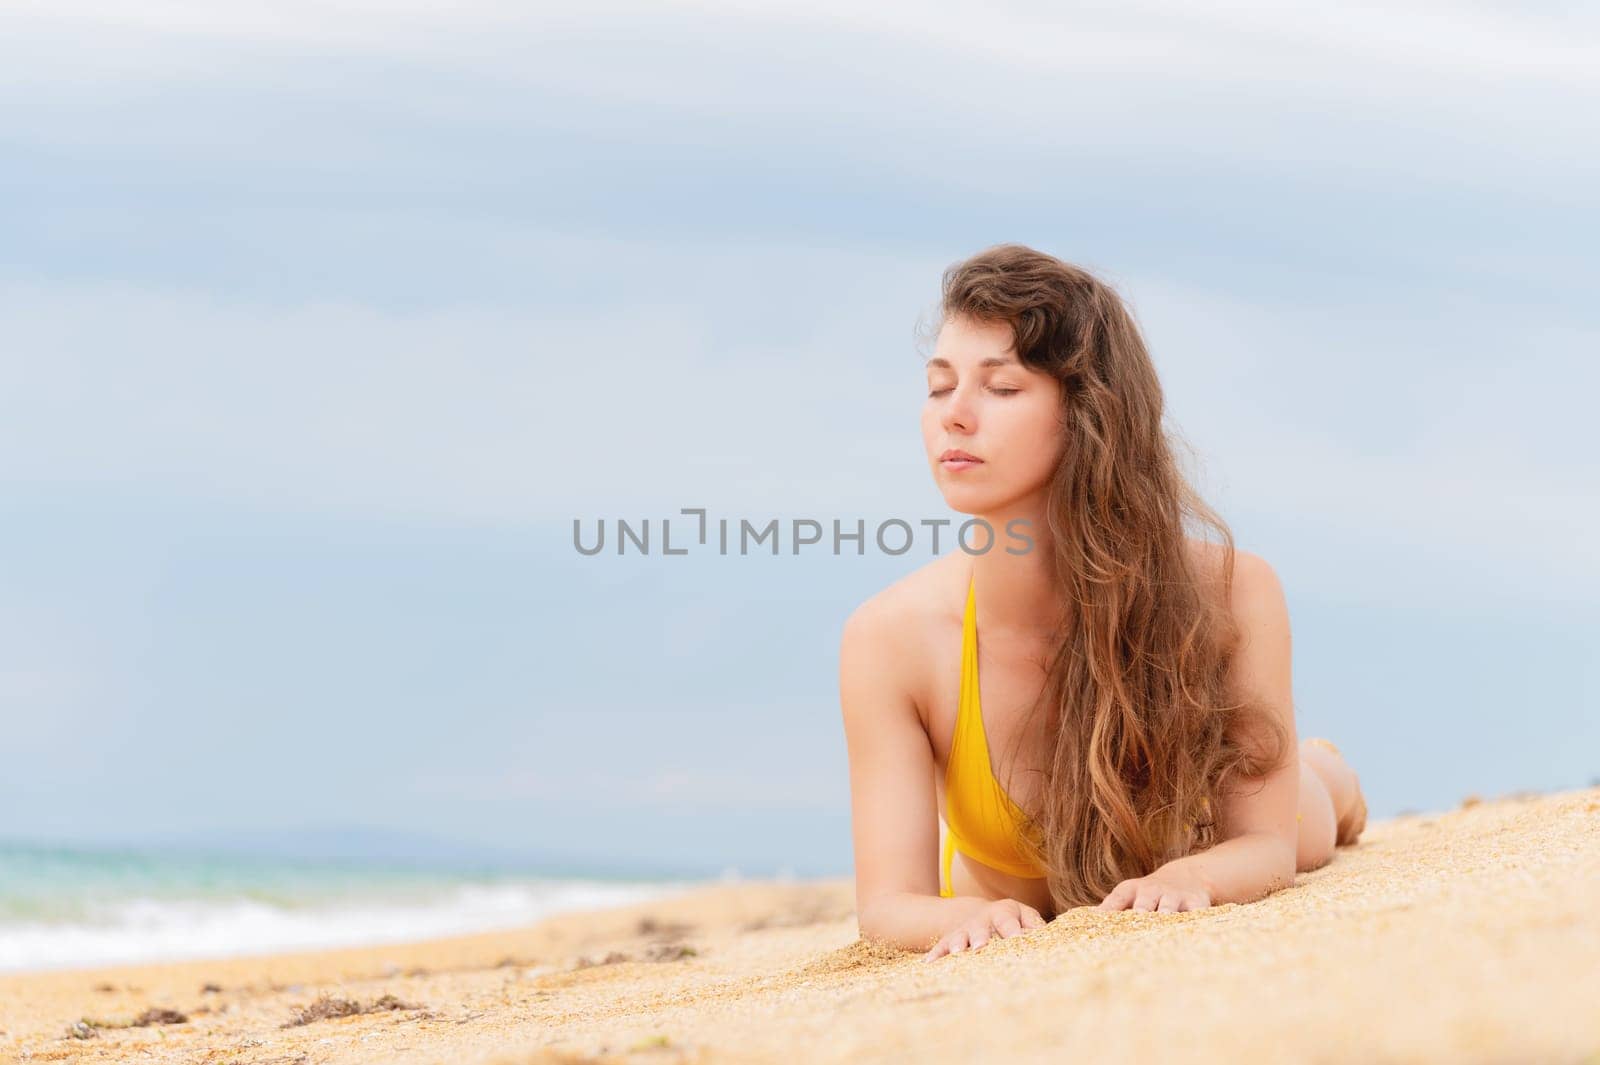 Beautiful woman with perfect body lies on sandy beach, wearing yellow bikini, sunbathing at beach resort, enjoying summer vacation.